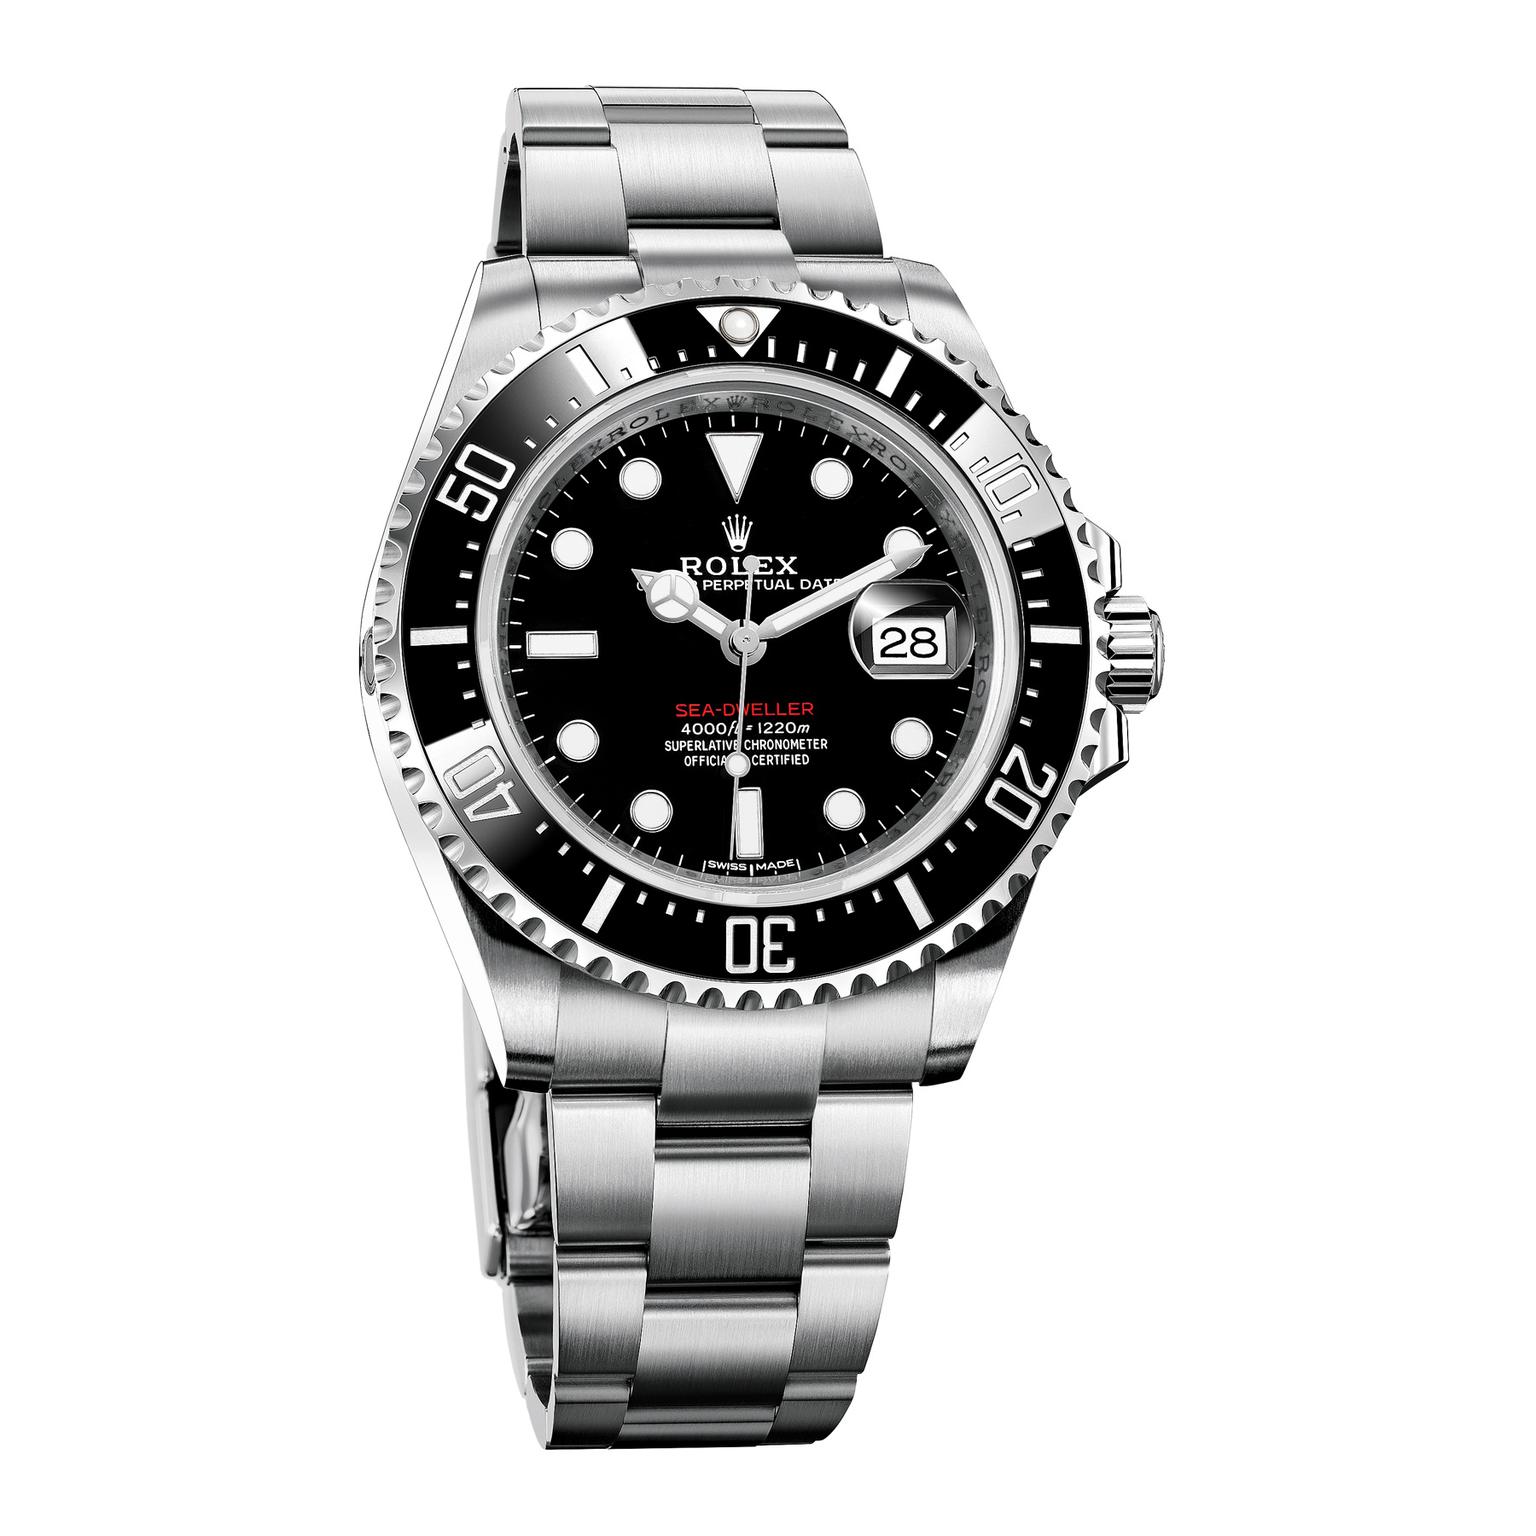 Rolex Oyster Perpetual Sea-Dweller watch